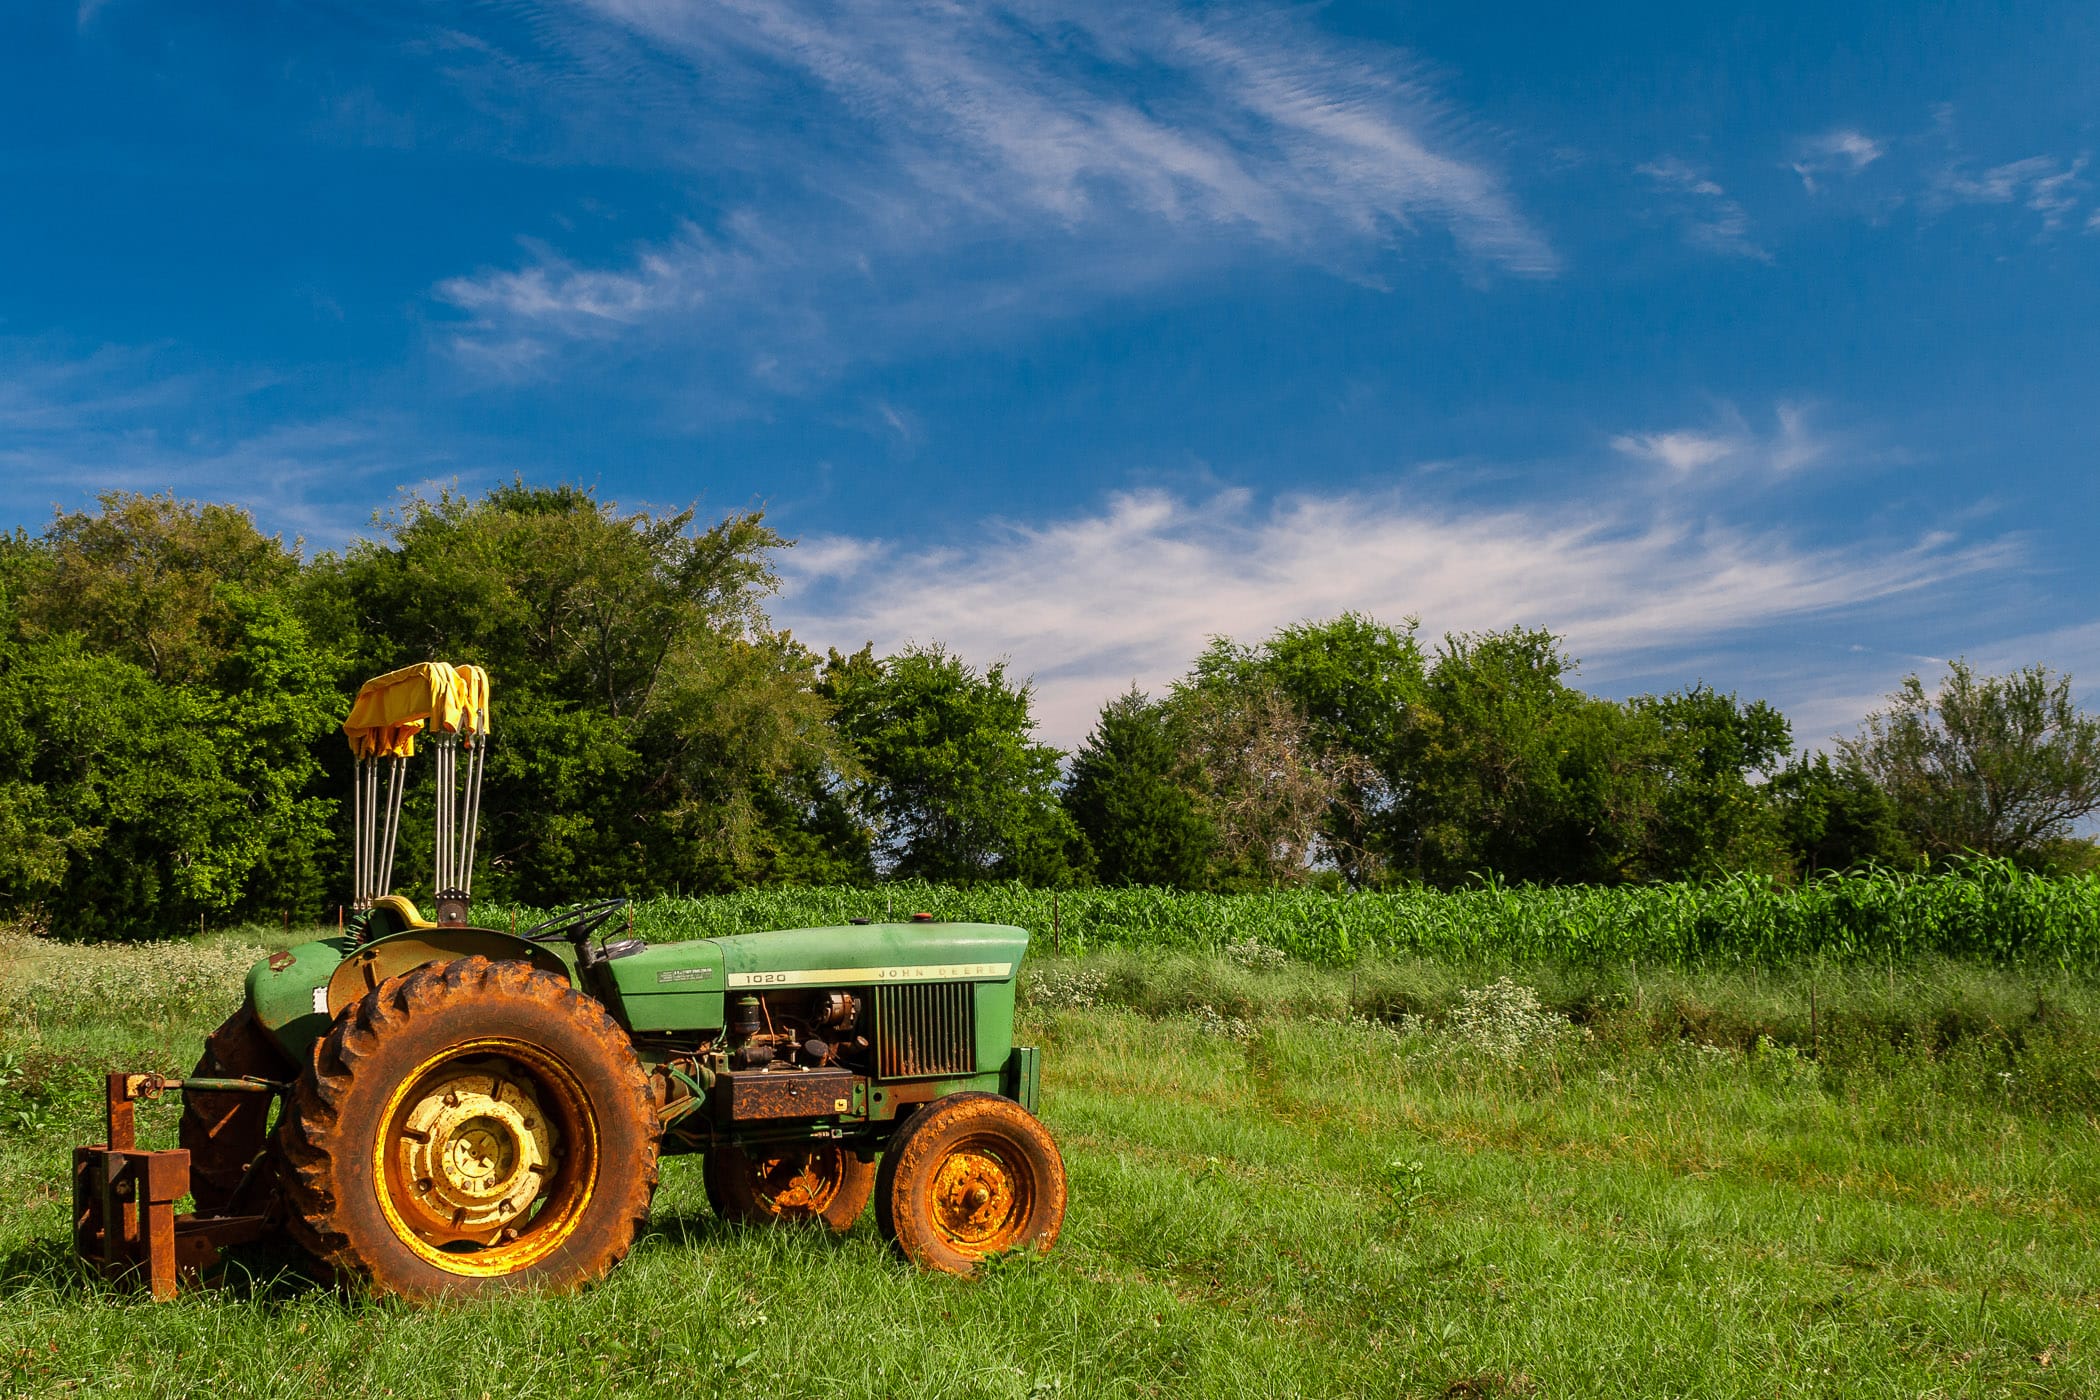 An old John Deere tractor at Moore Farms in Bullard, Texas.